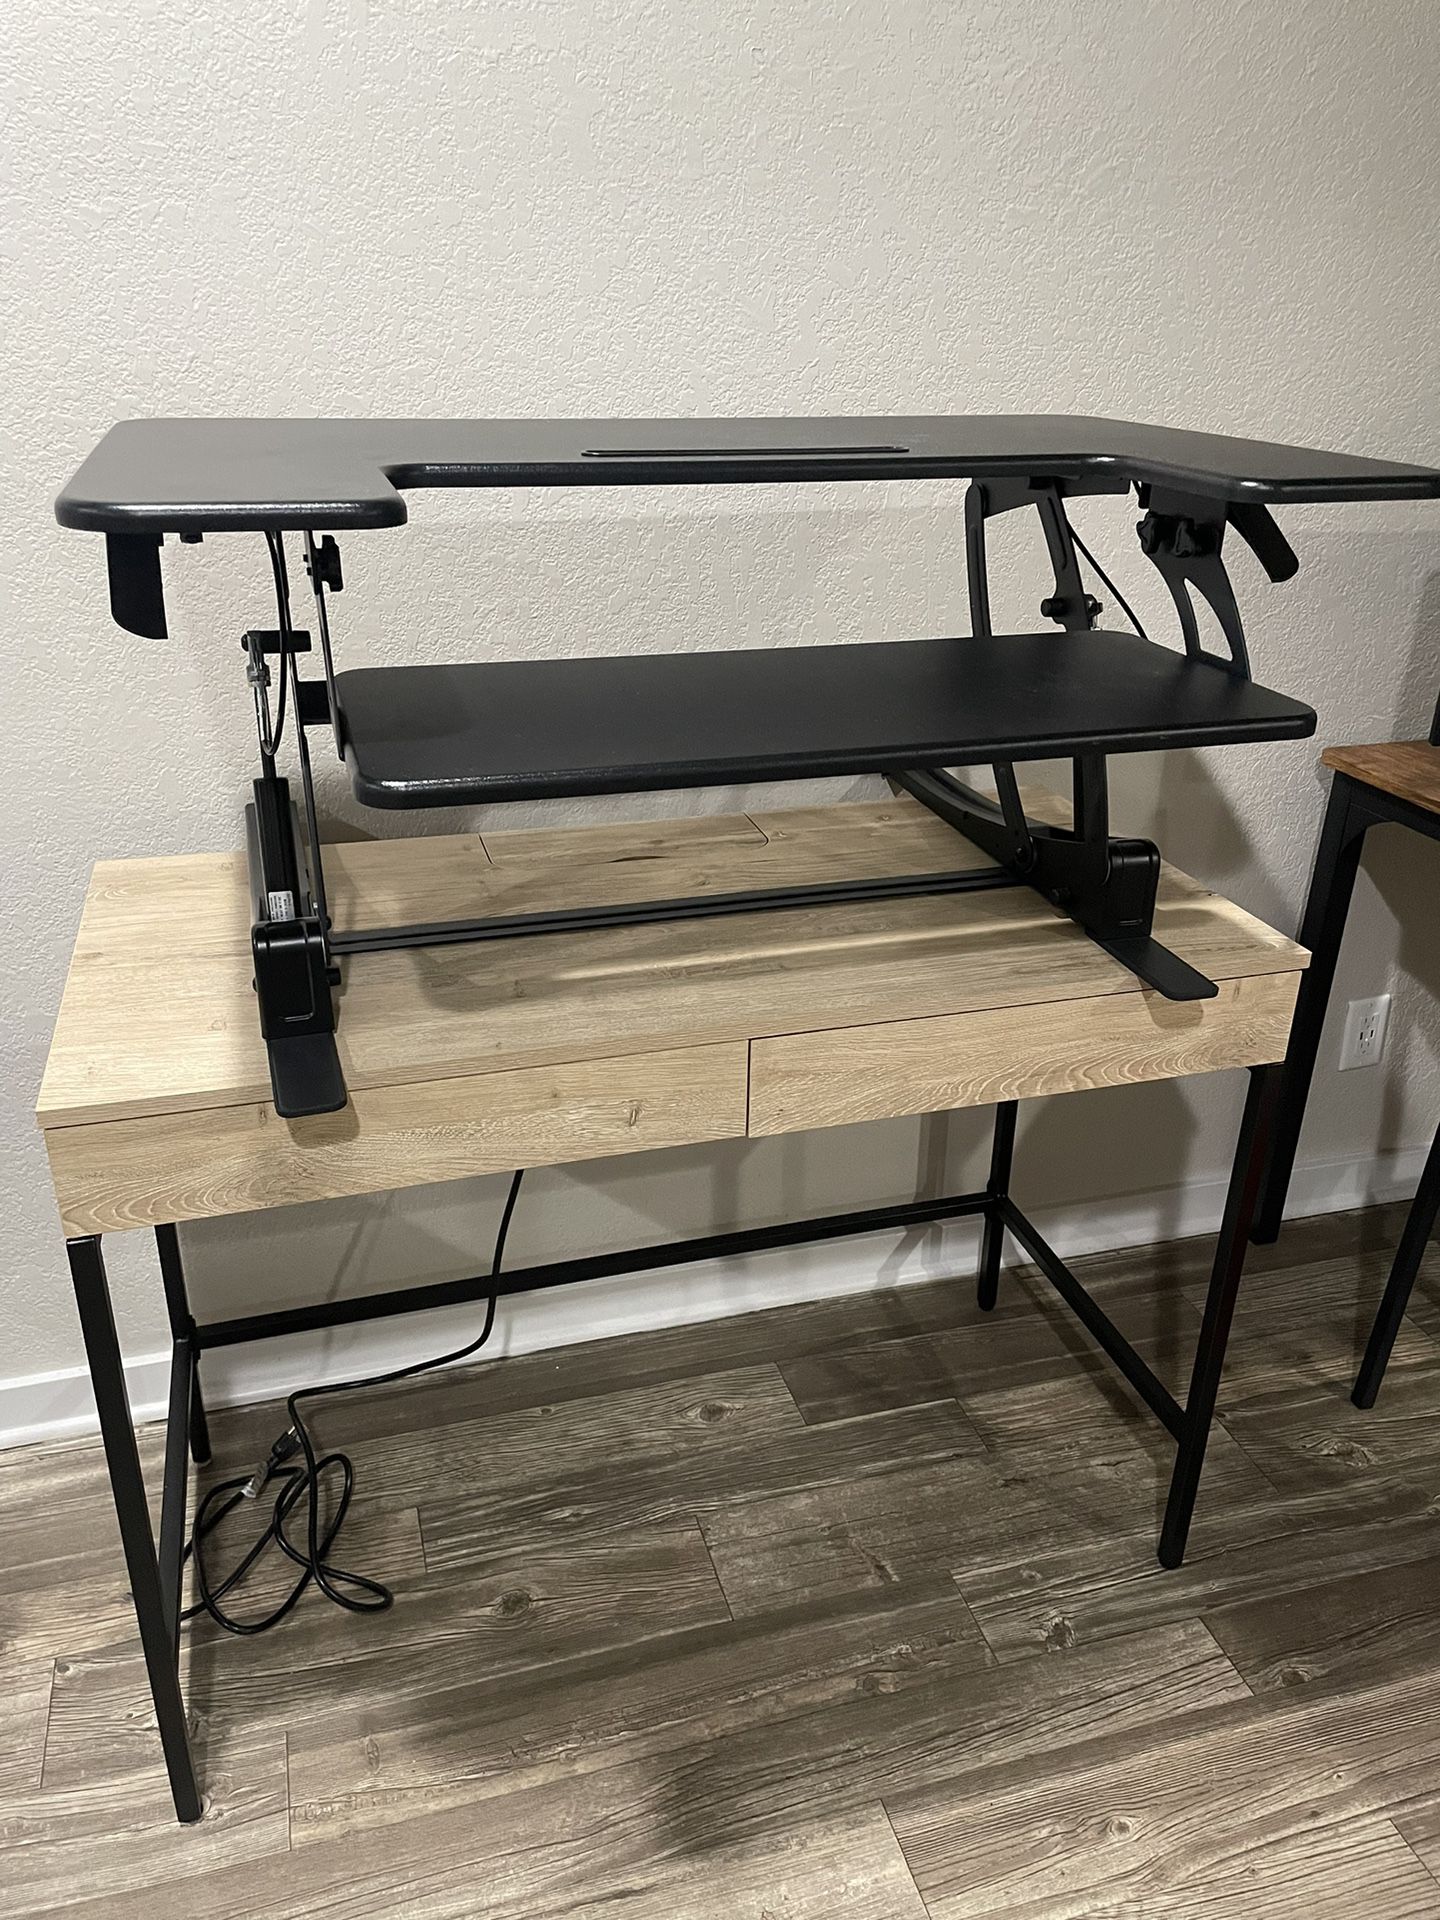 Desk Lift- Adjustable Desk Lift Converter